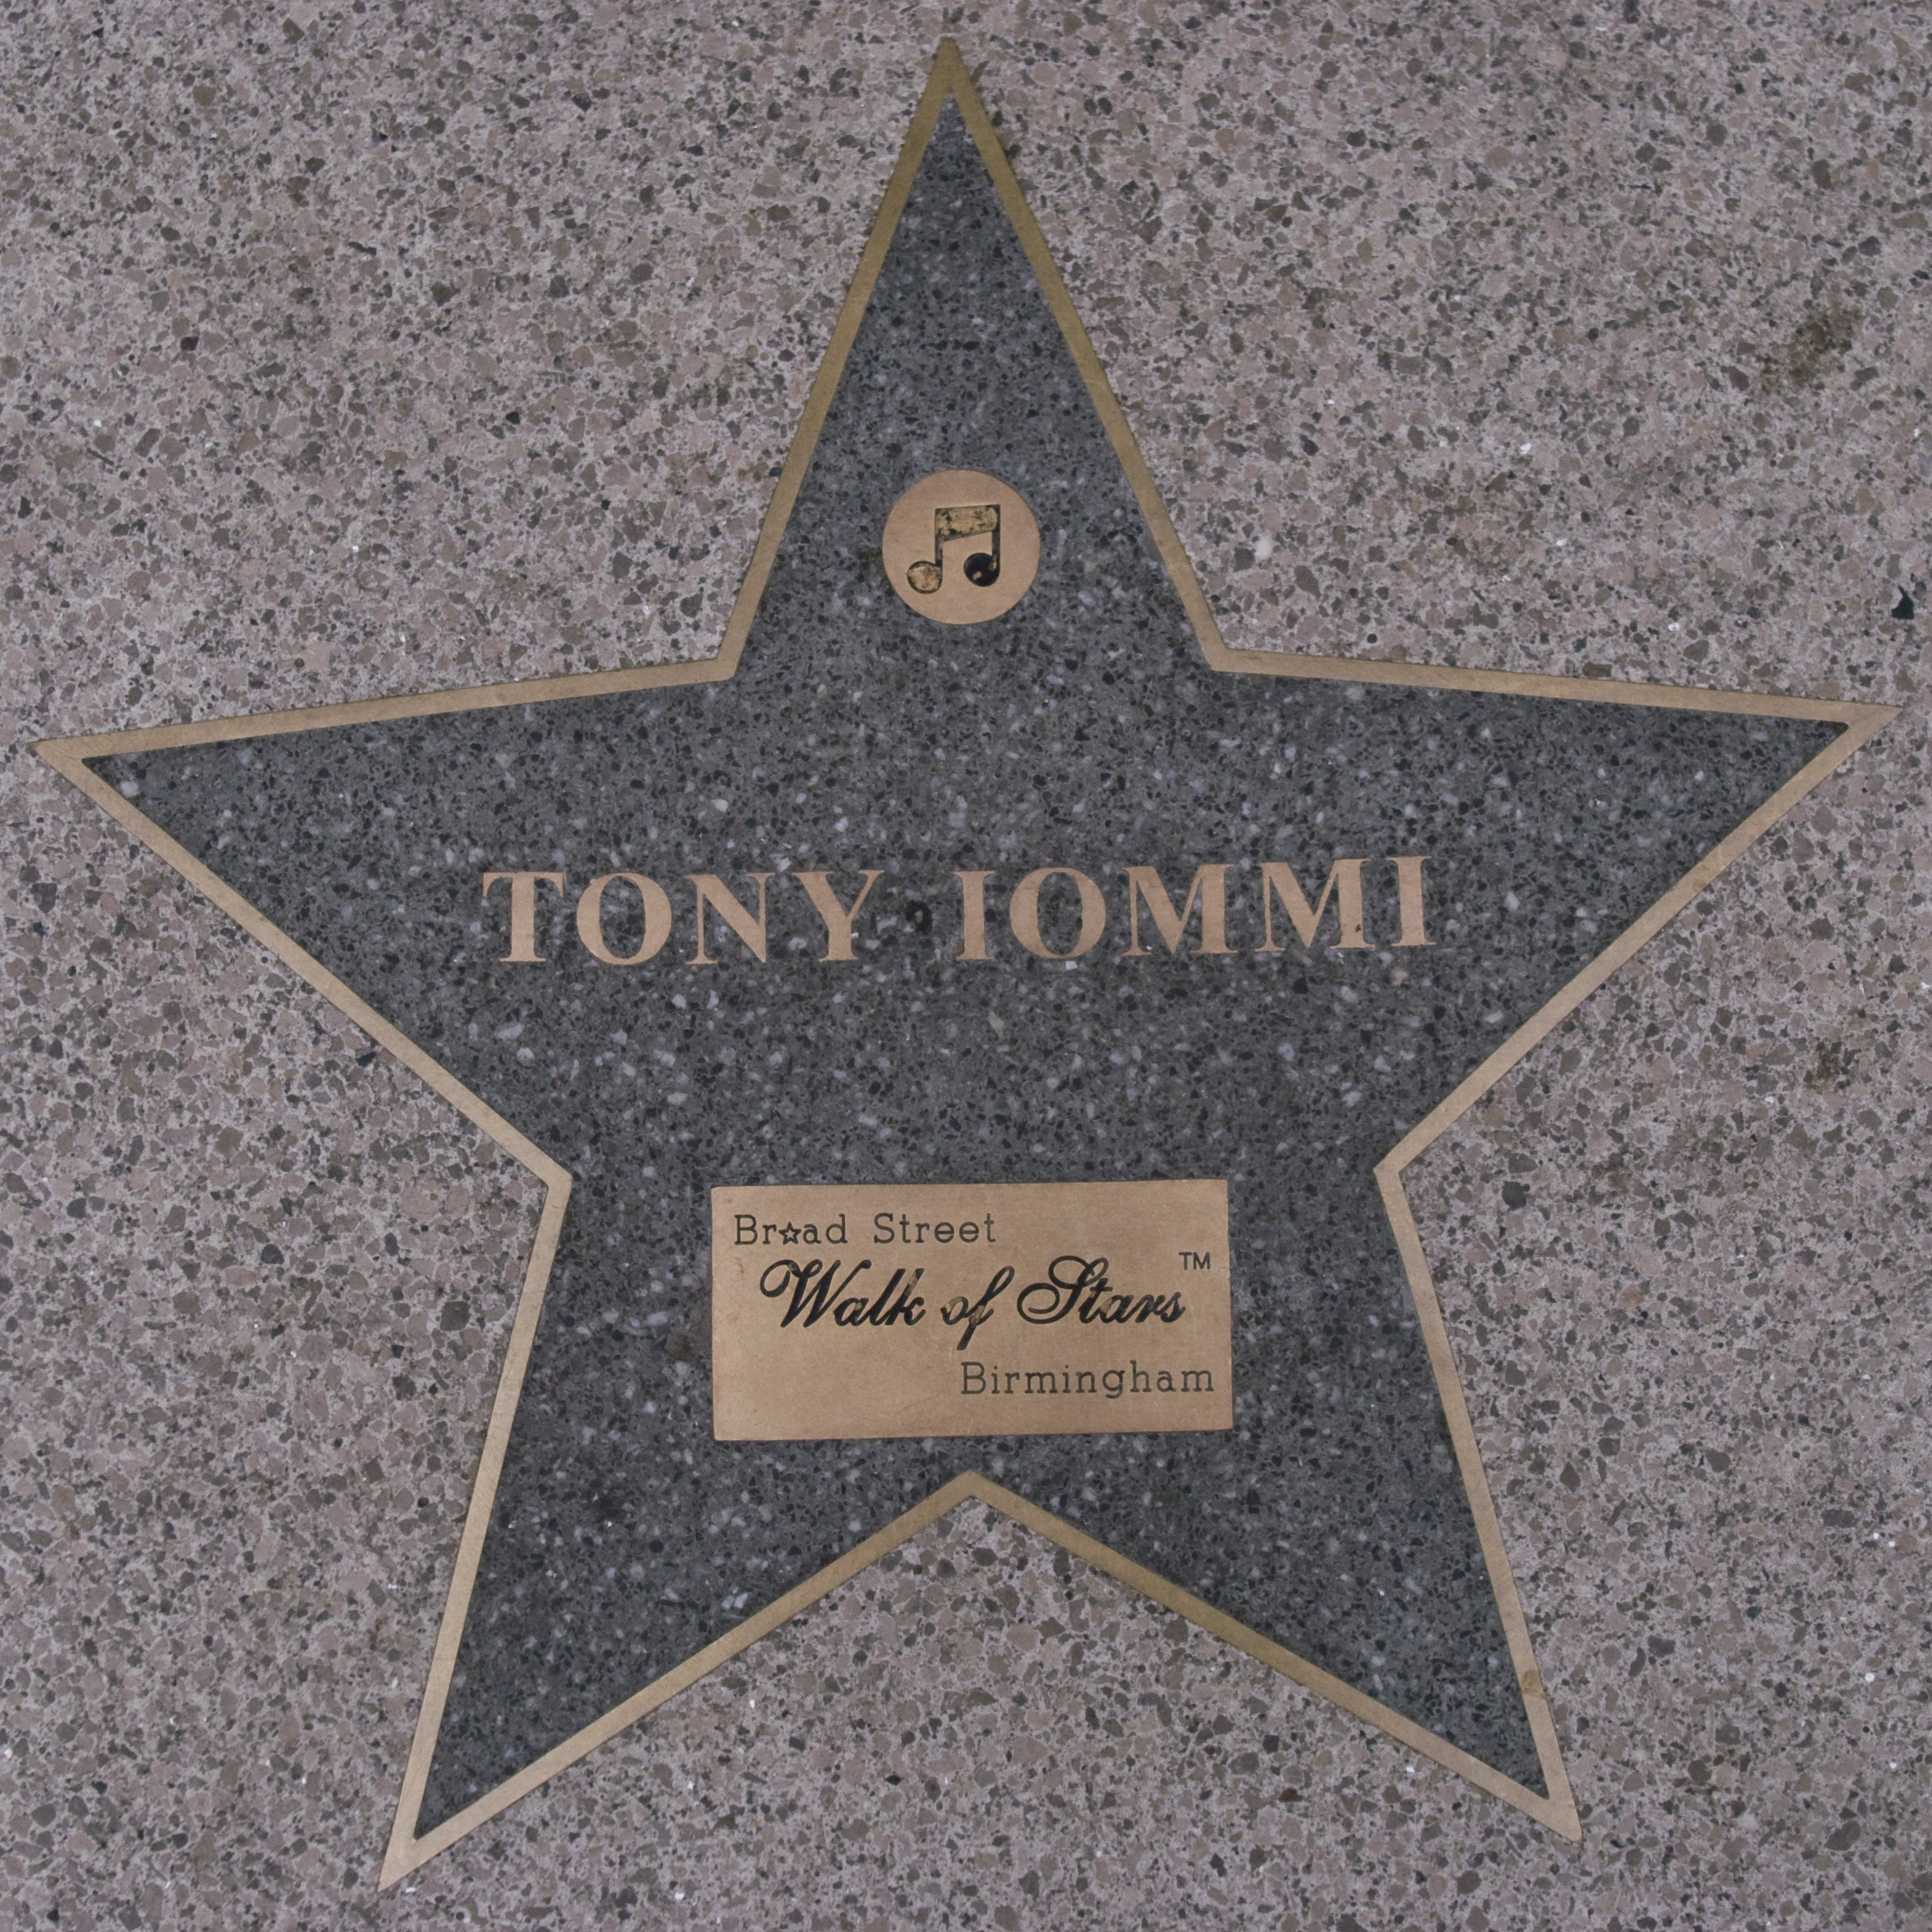 IOMMI Star on Birmingham Walk of Stars